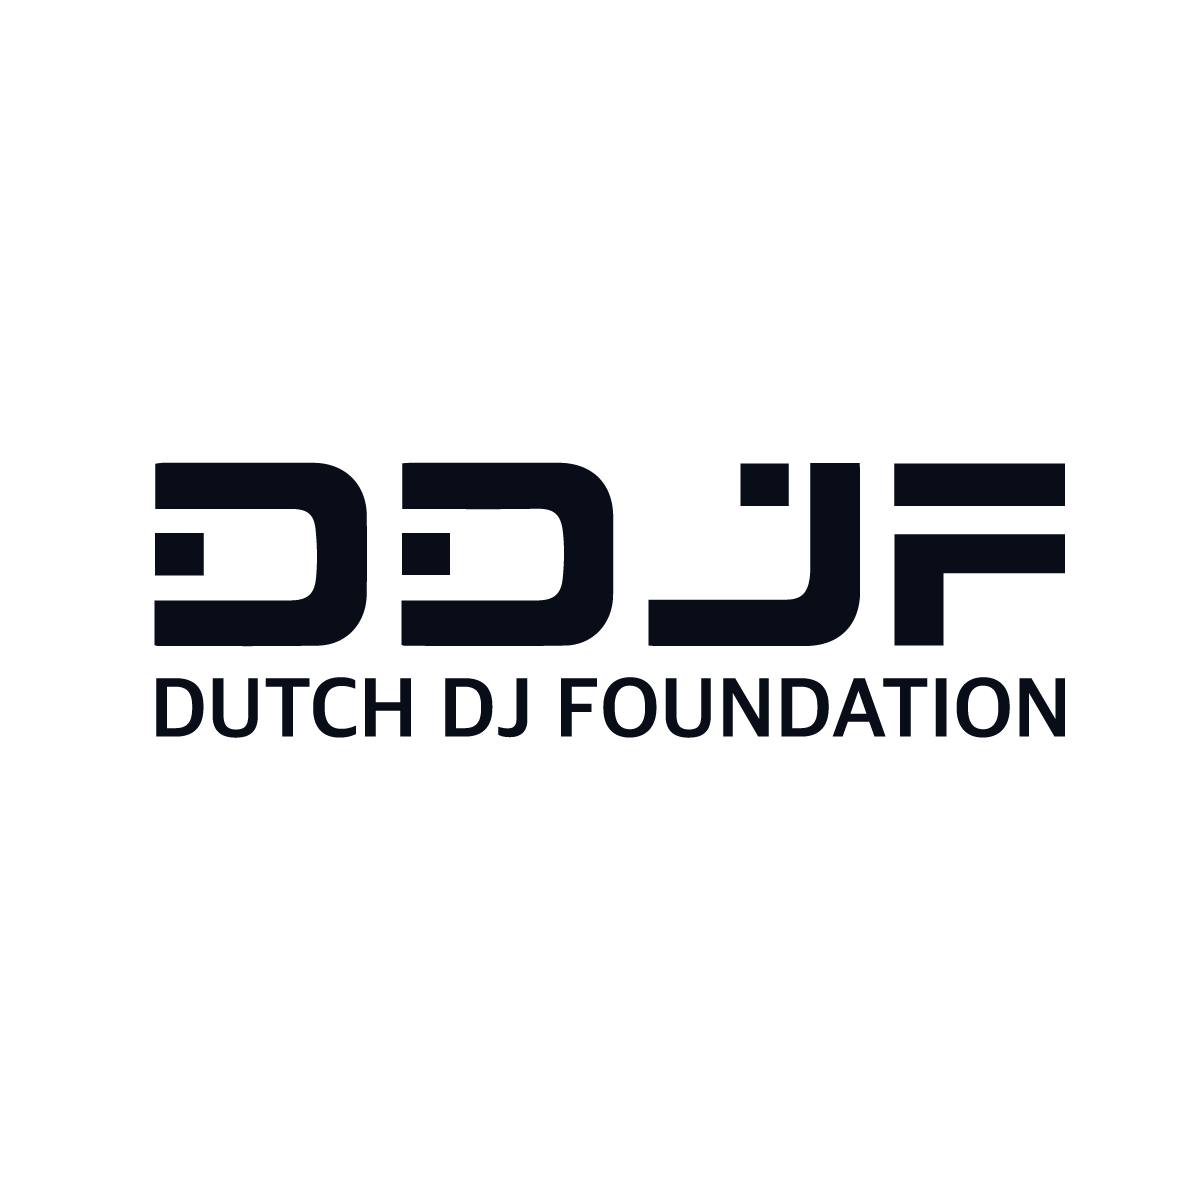 DUTCH DJ FOUNDATION